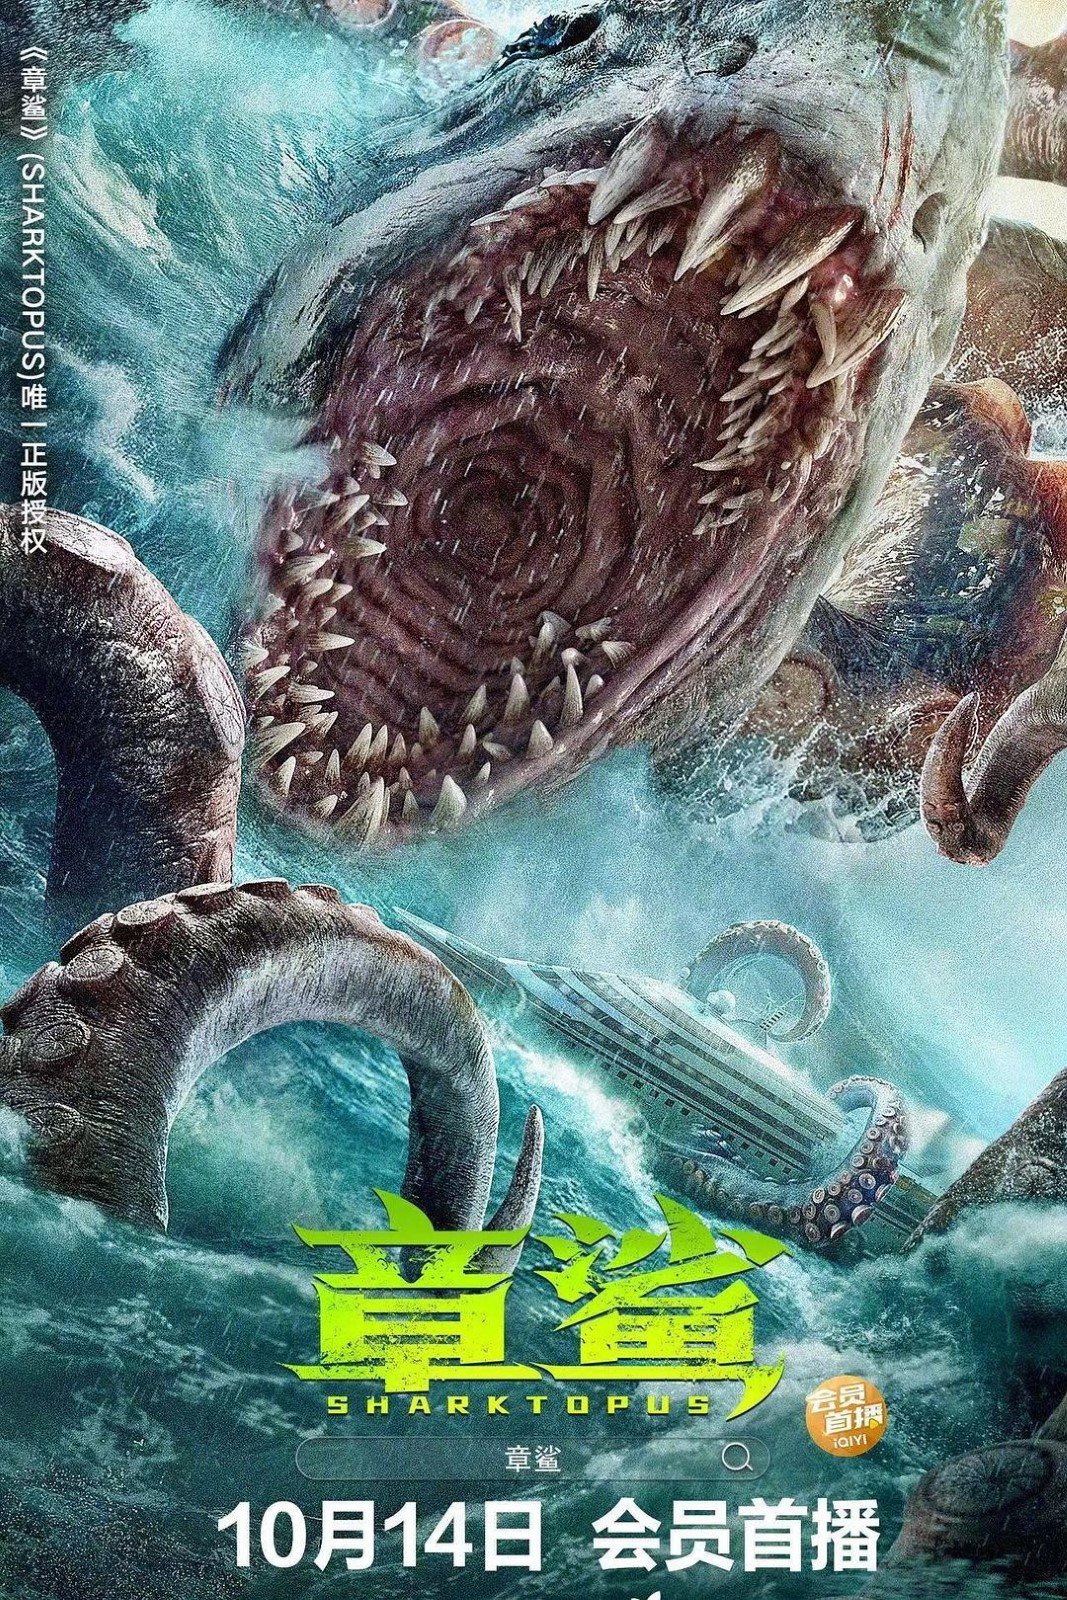 Sharktopus Remake Poster 2